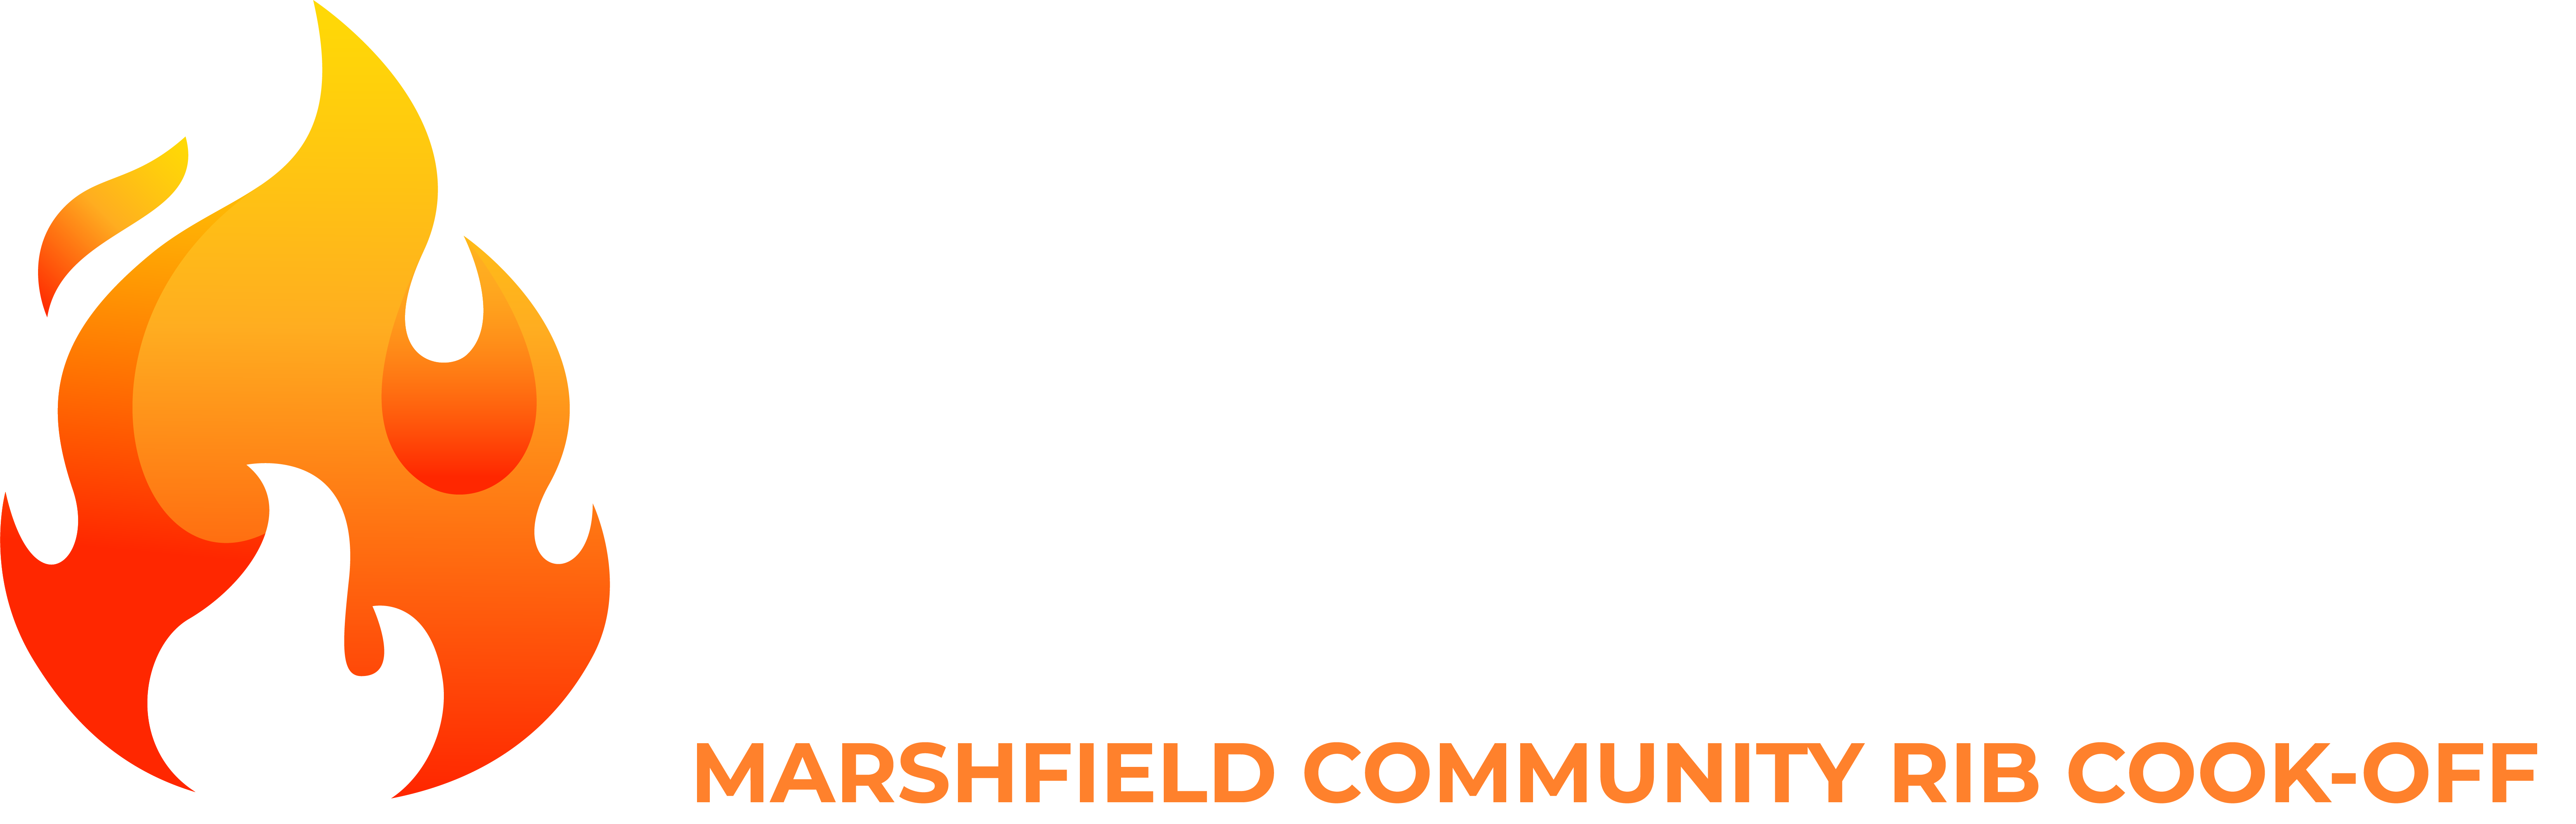 The Marshfield Community Rib Cook-off